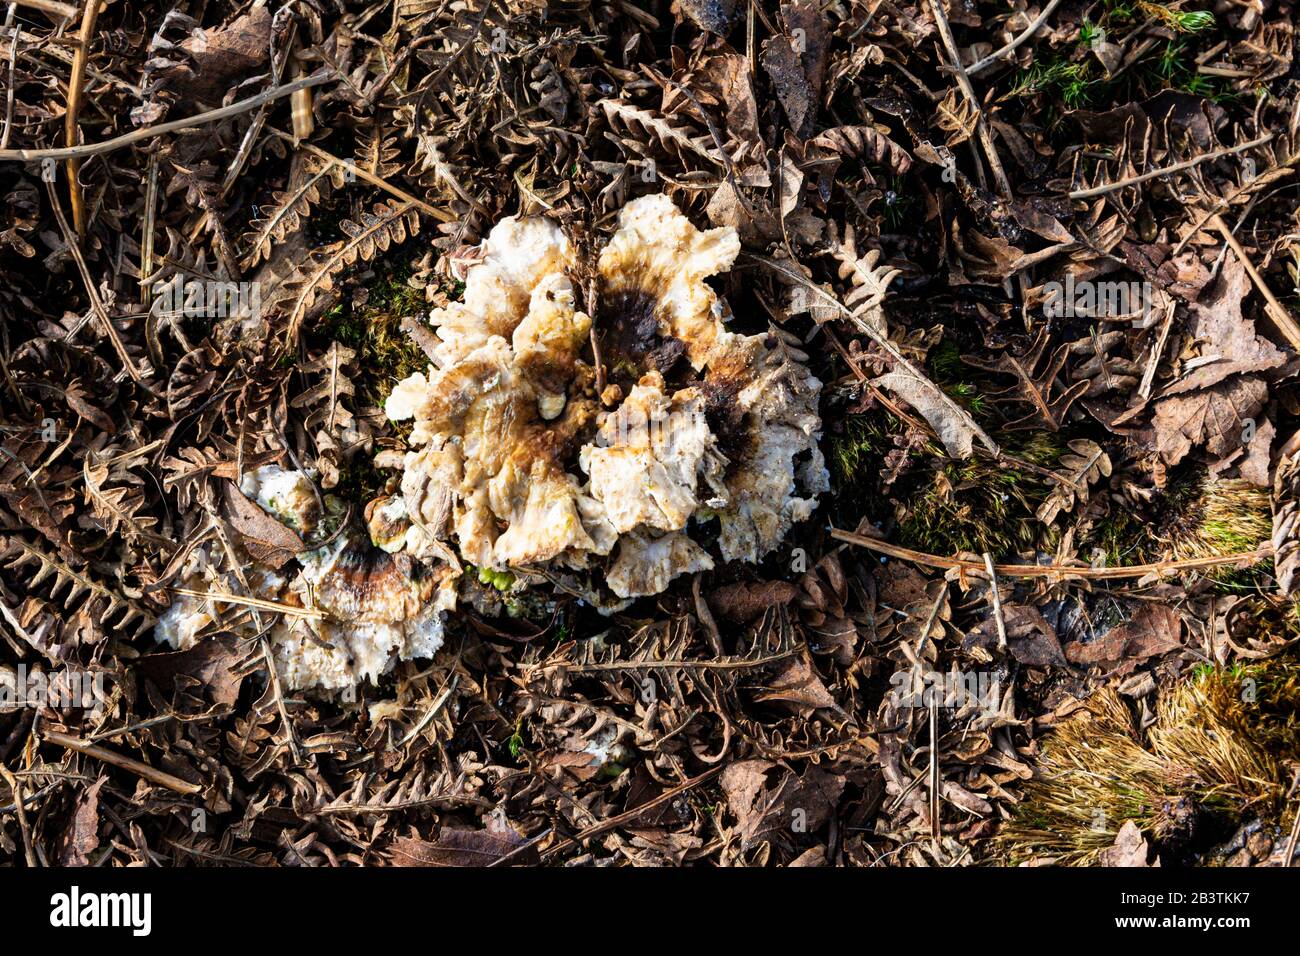 Fungus growing on the ground Stock Photo